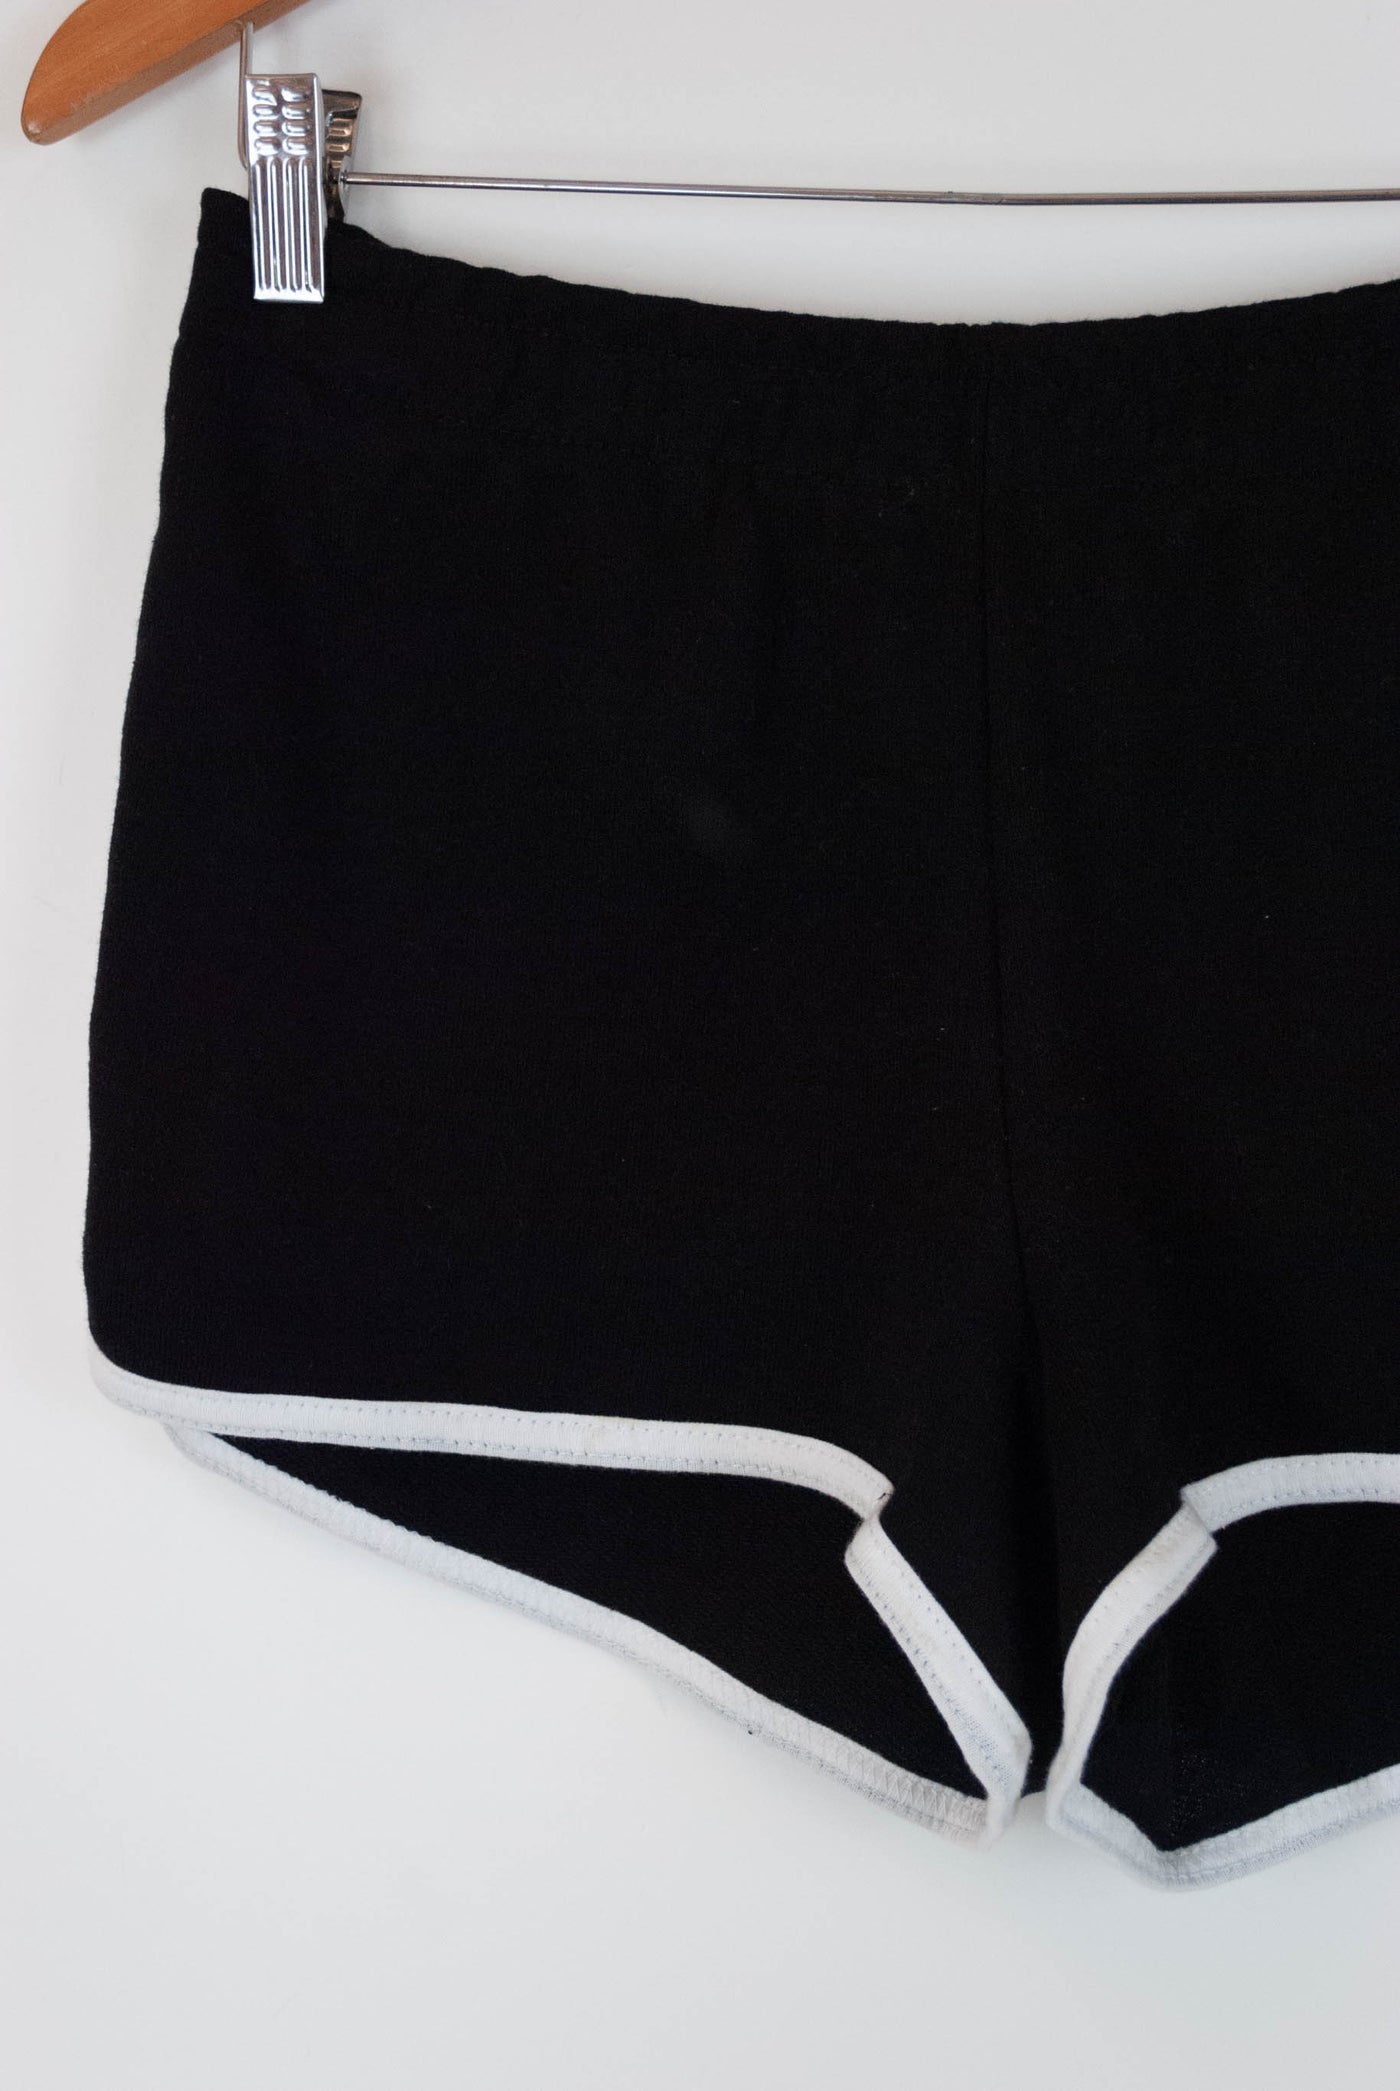 Pantalón de deporte negro con bordes en blanco